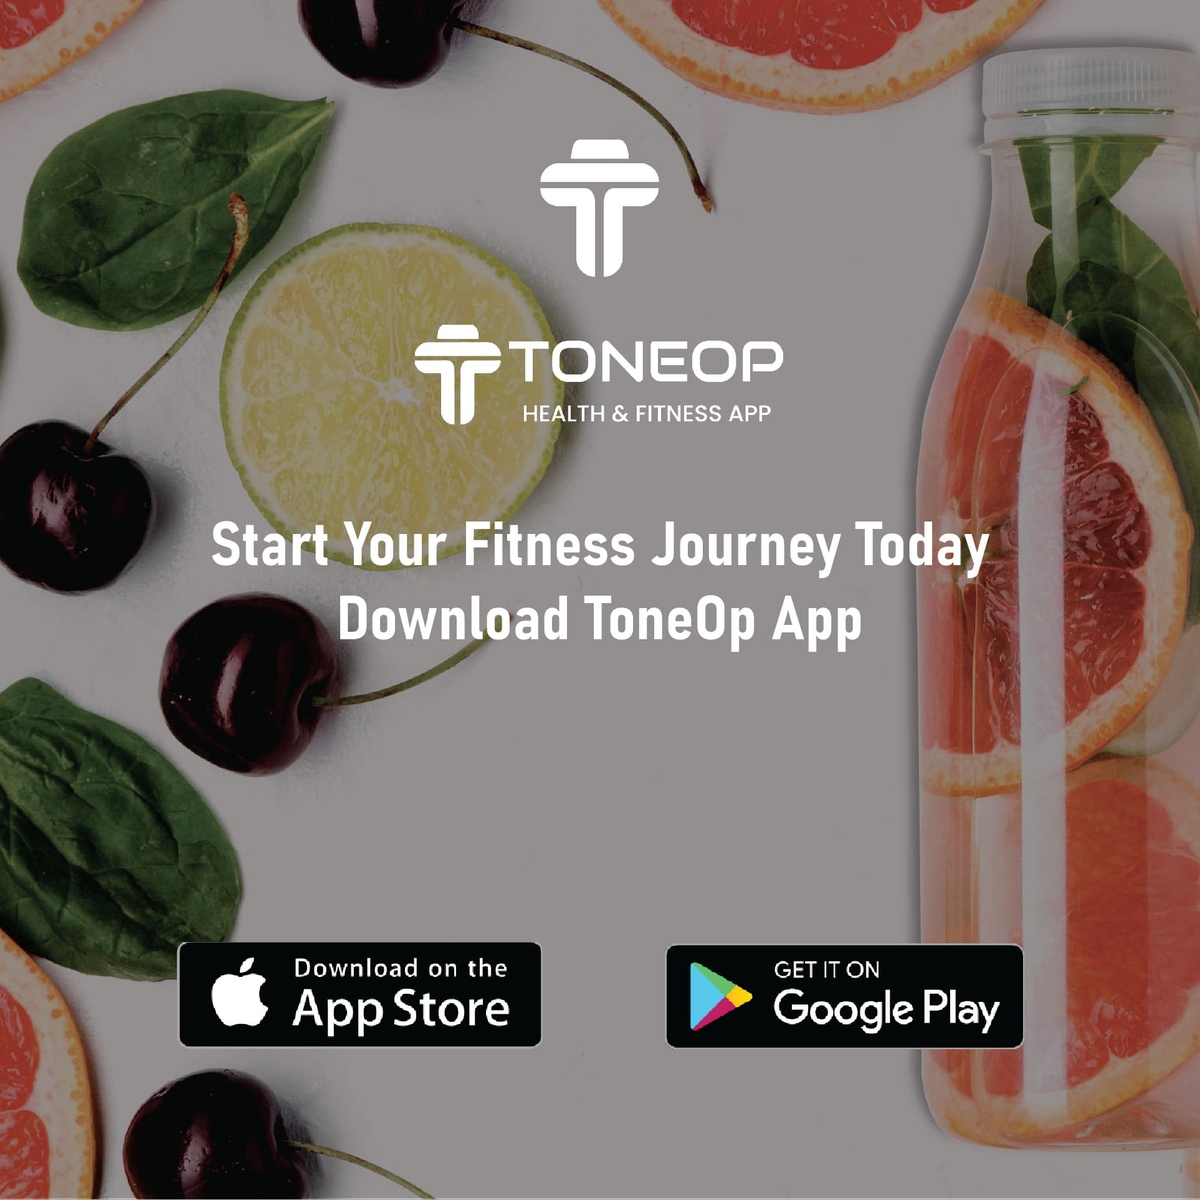 Toneop app App store, Google Play Link